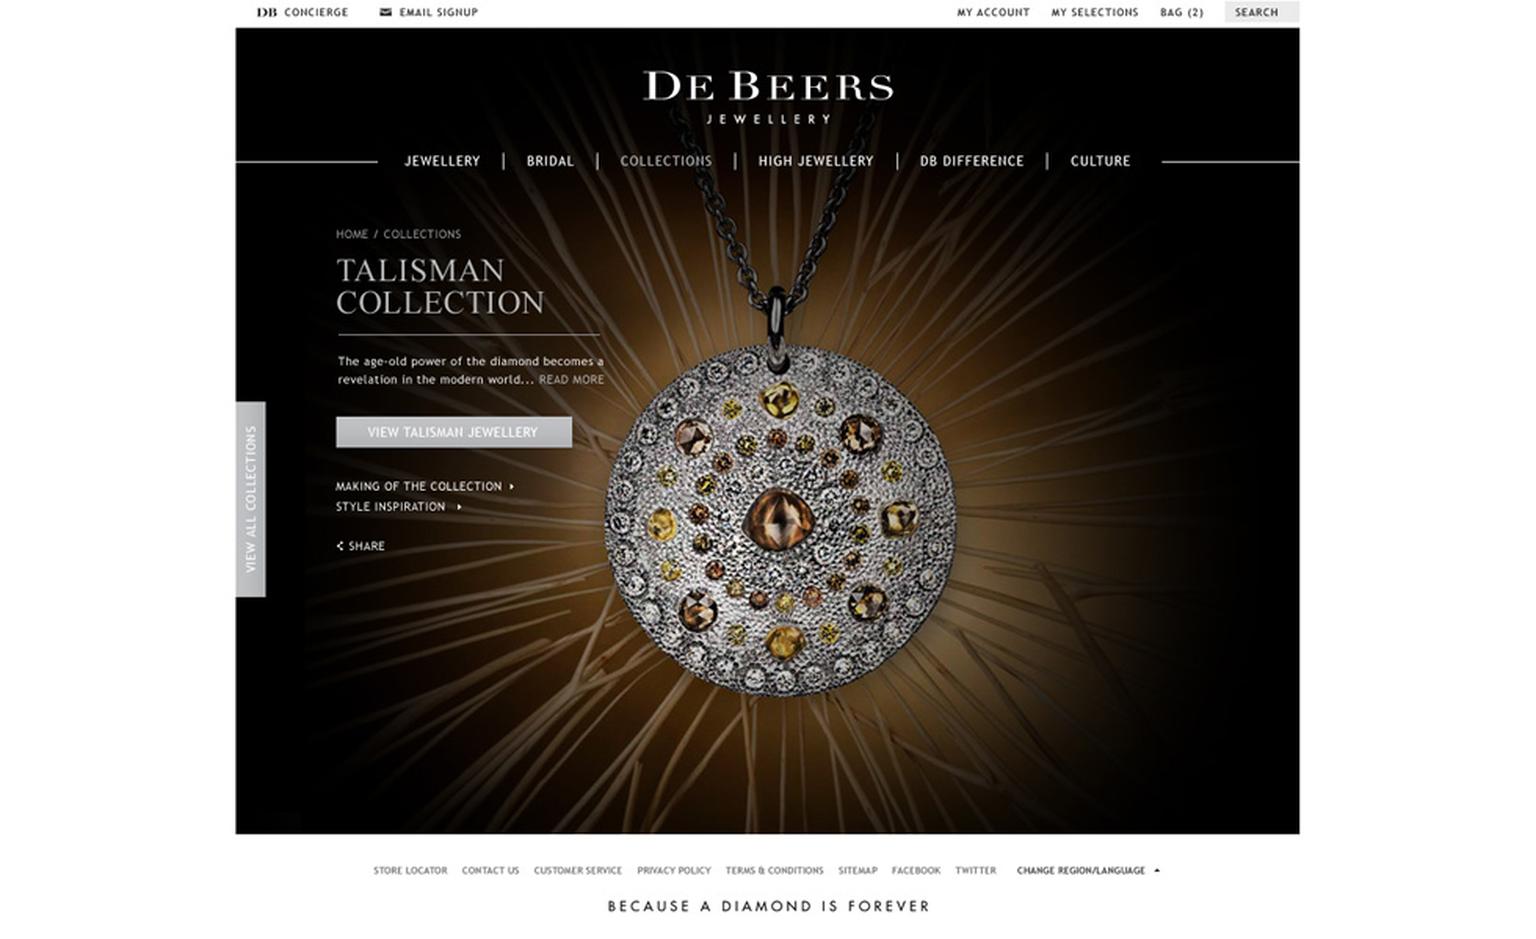 Image from De Beers new website featuring Talisman pendant